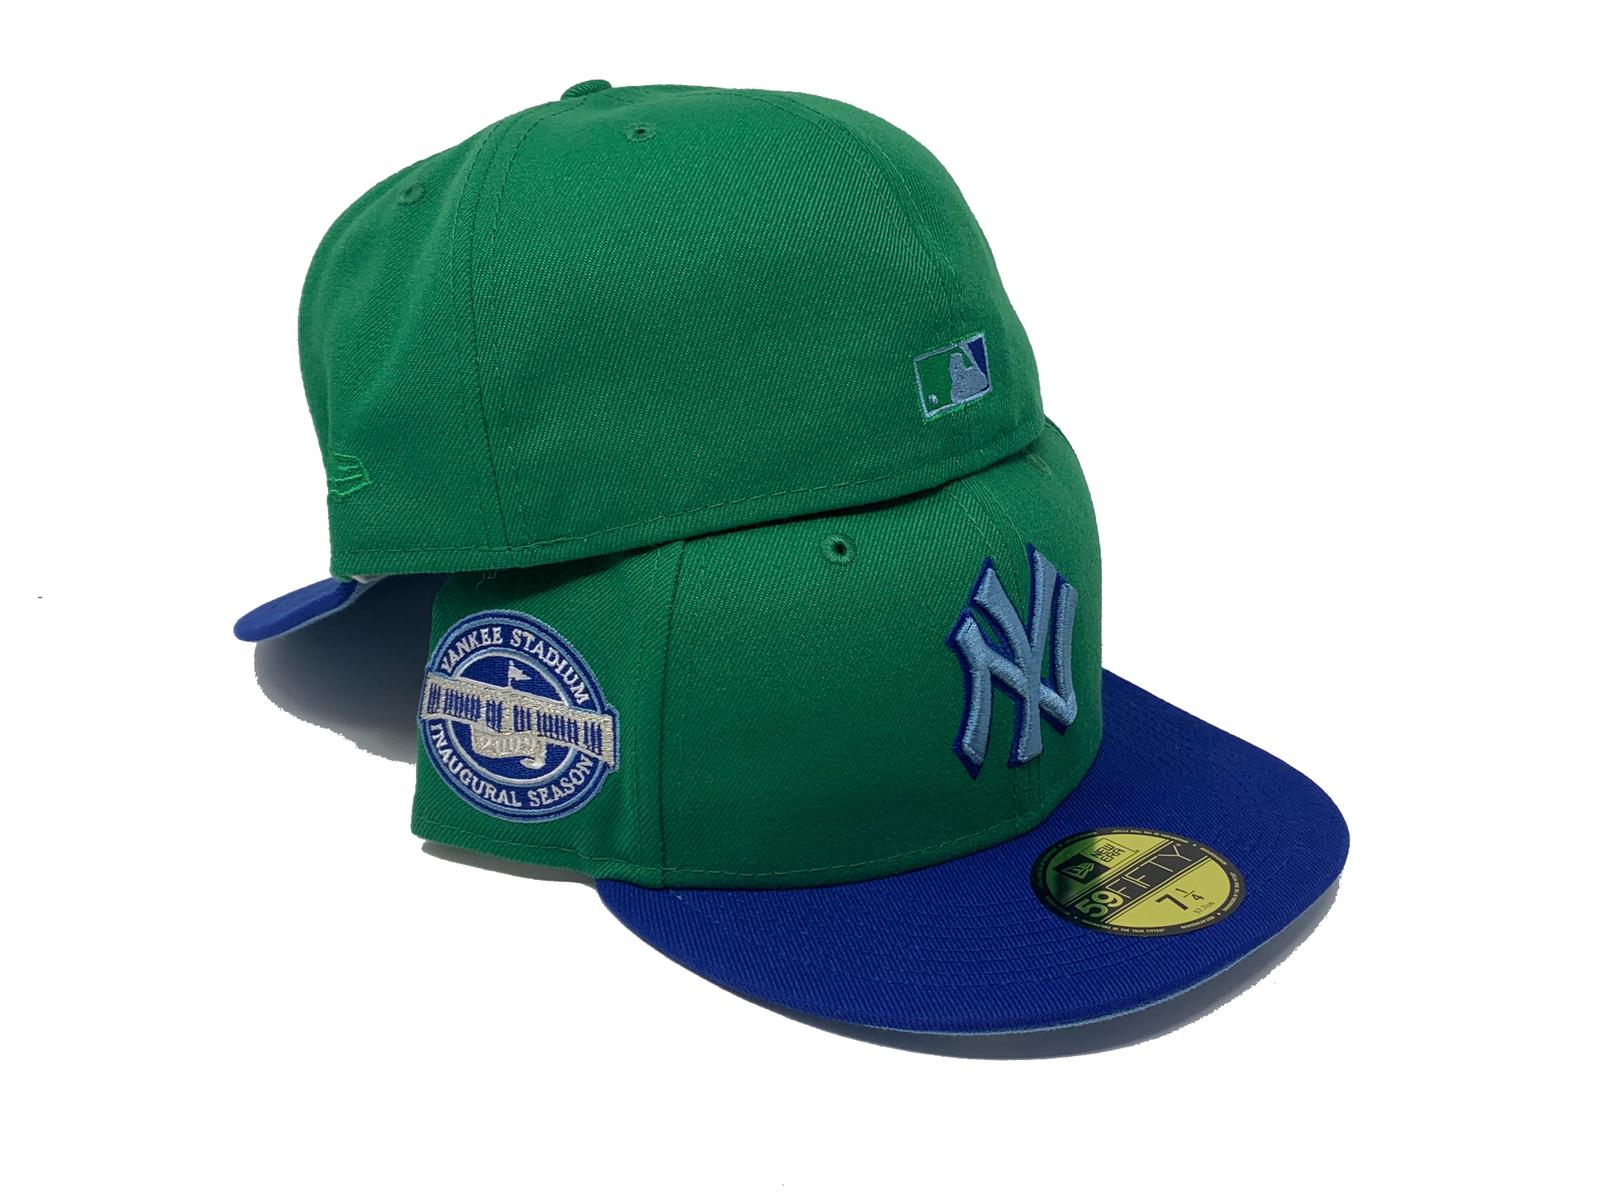 New Era T-Shirt - New York Yankees - Green Med » ASAP Shipping